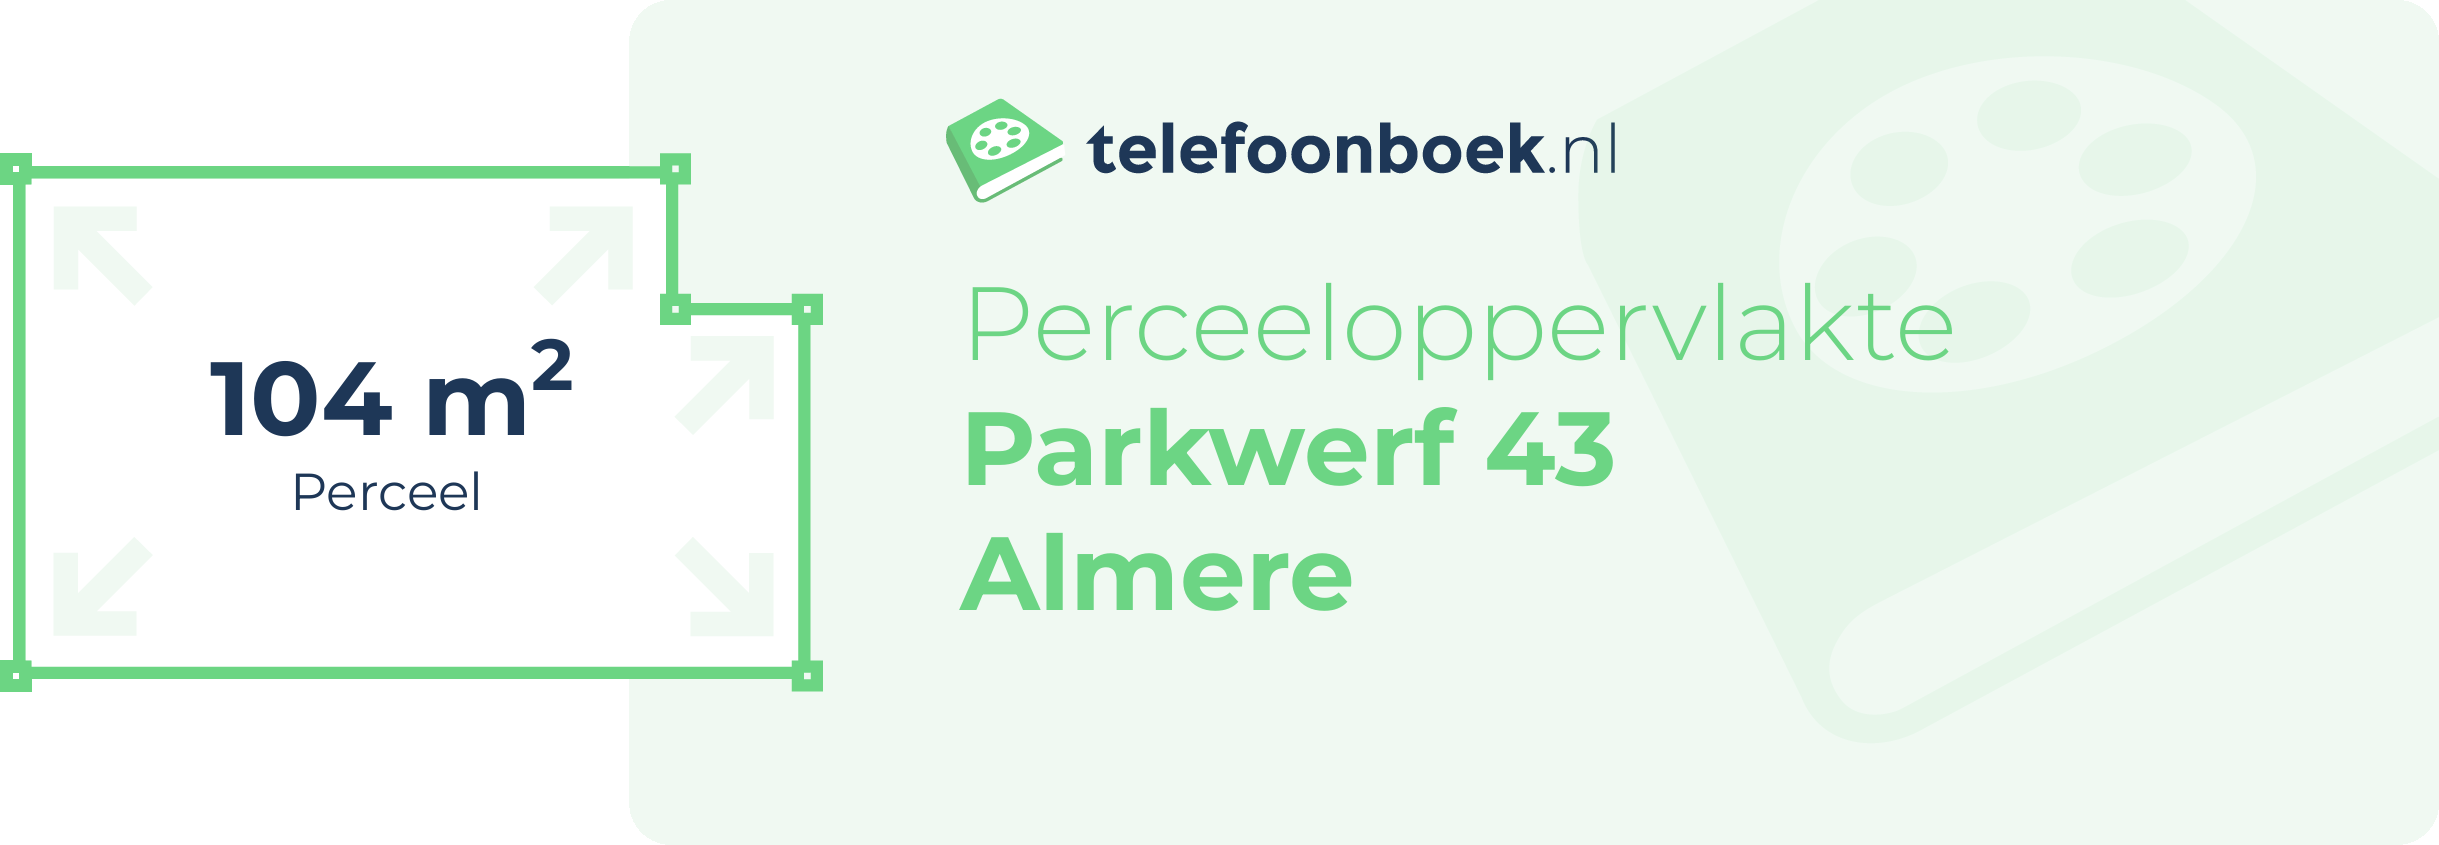 Perceeloppervlakte Parkwerf 43 Almere